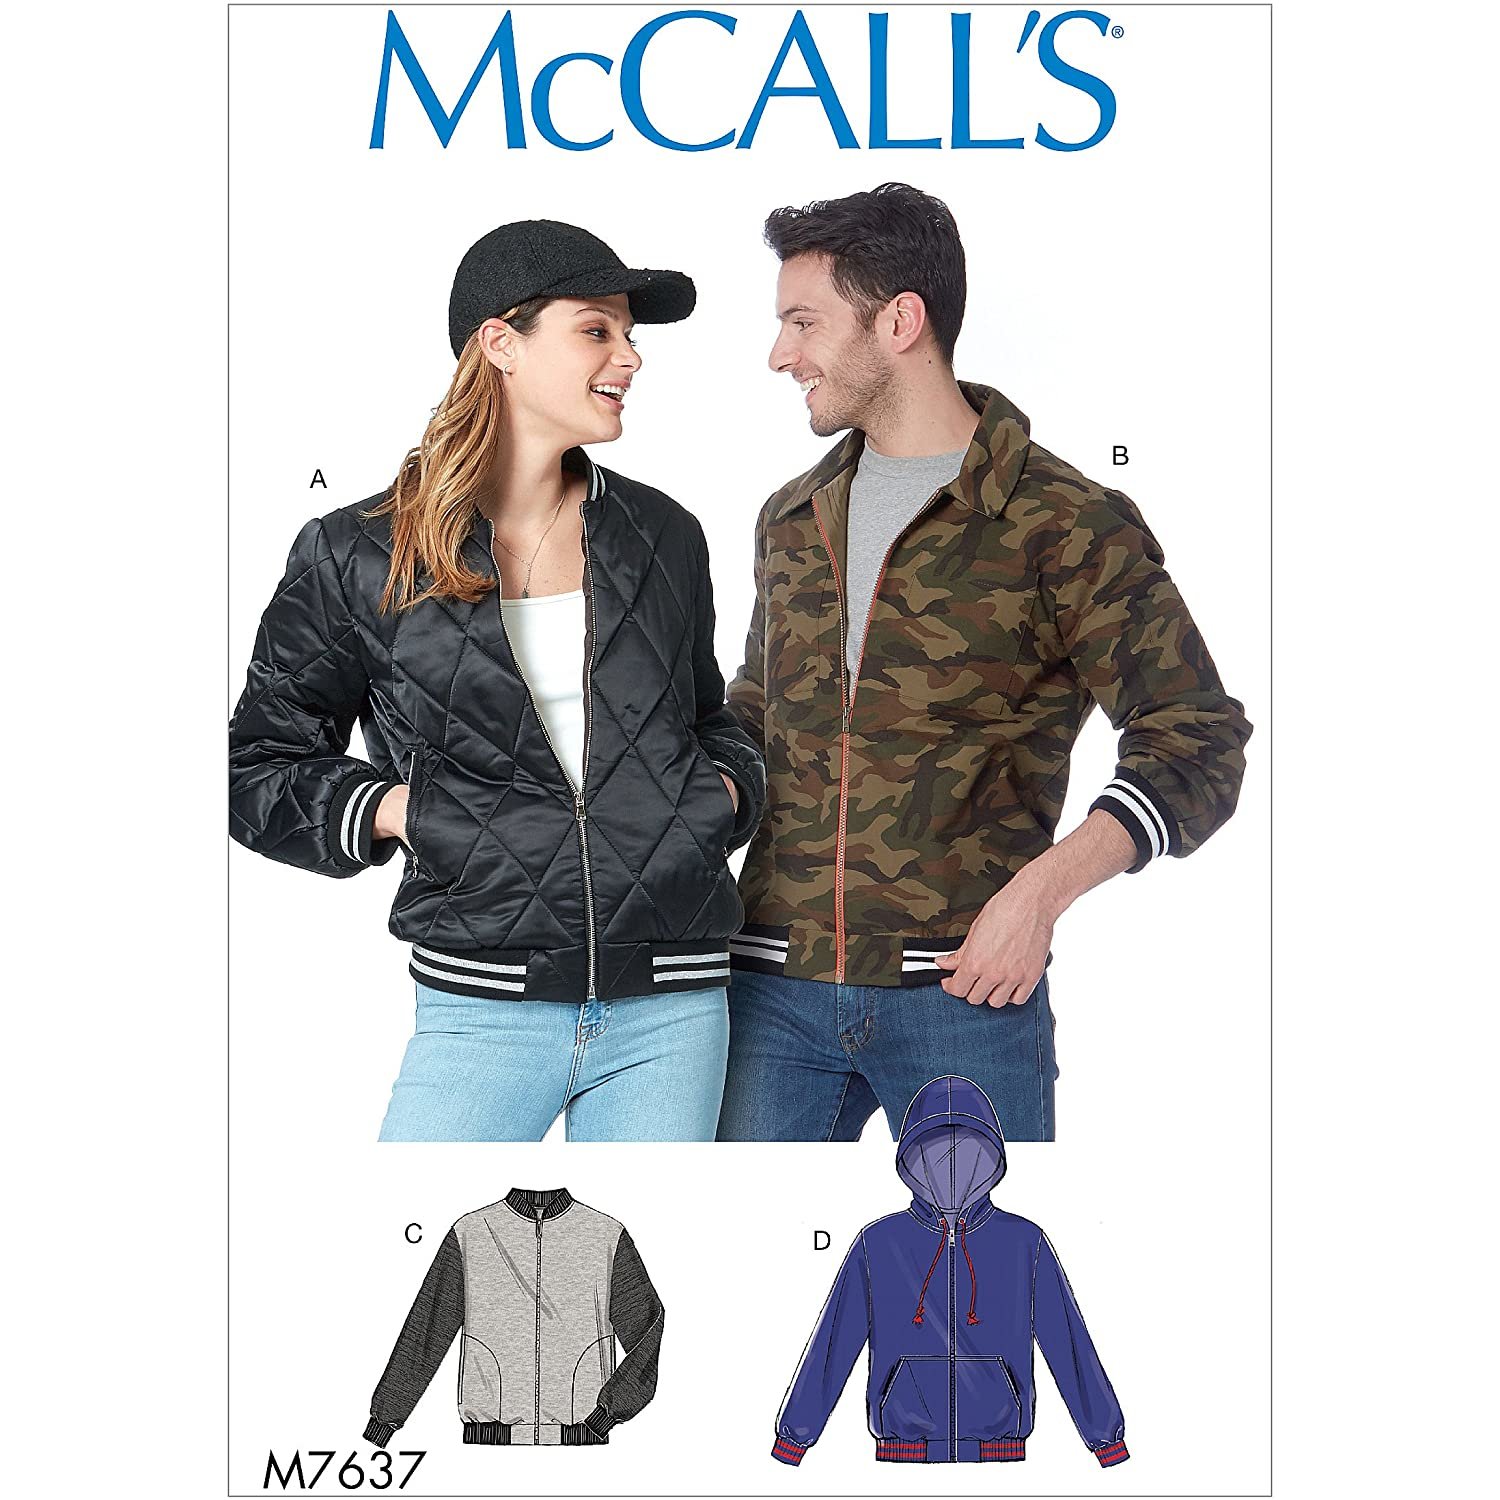 McCall's Patterns 7637 XM,Misses and Men's Jackets,Sizes S-L, Tissue Multi/Colour, 17 x 0.5 x 0.07 cm